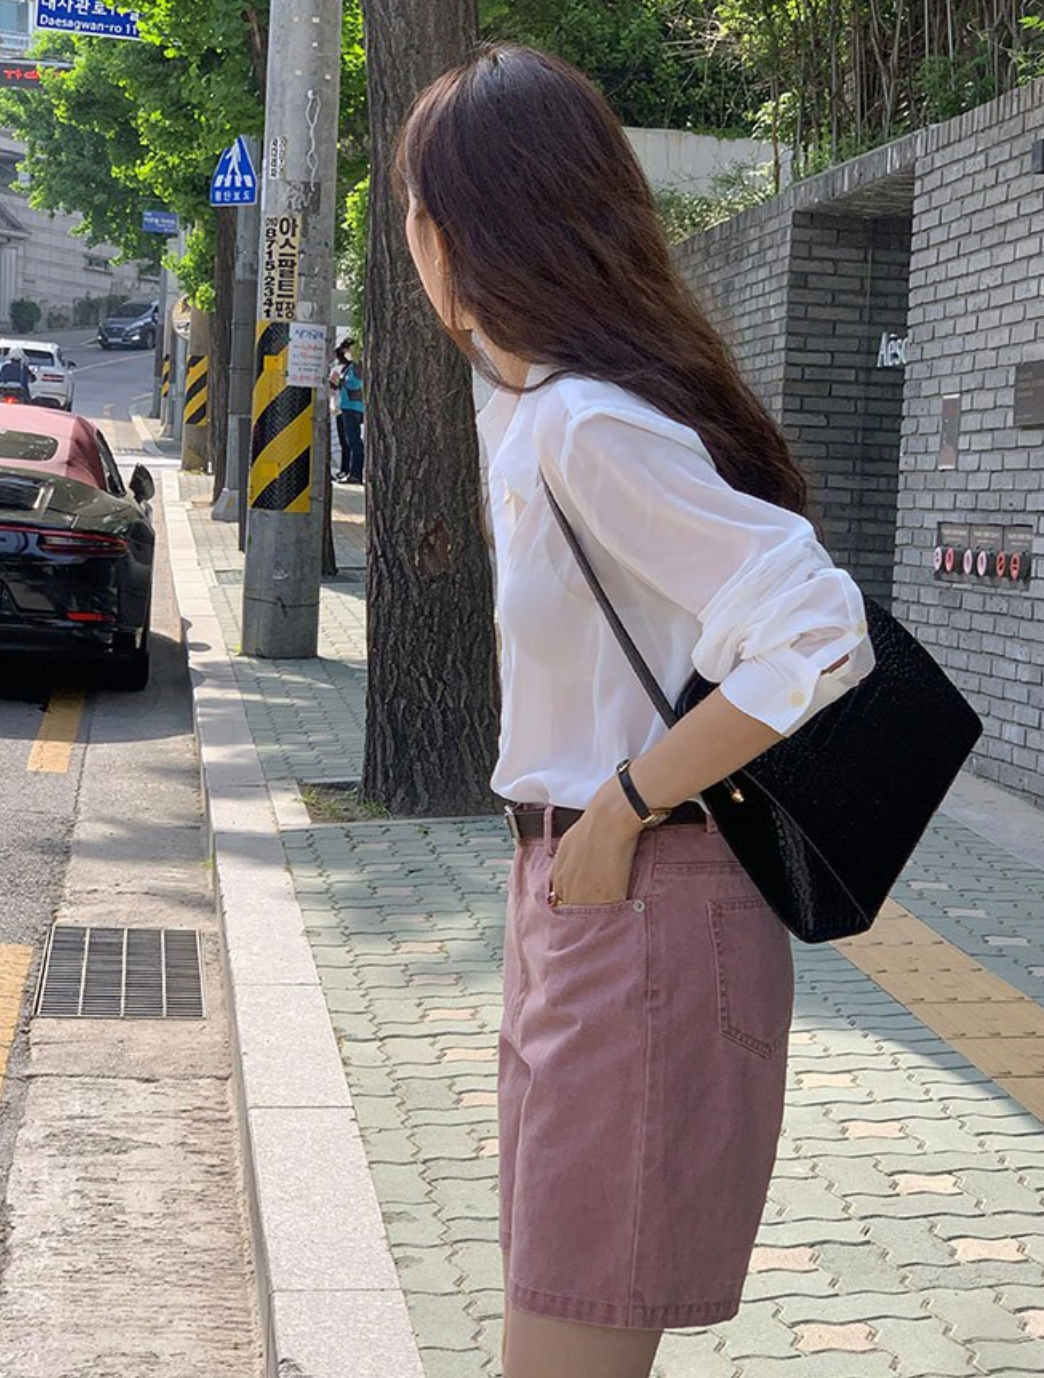 [Korean Style] 4 Colors High Waist Bermuda Denim Shorts